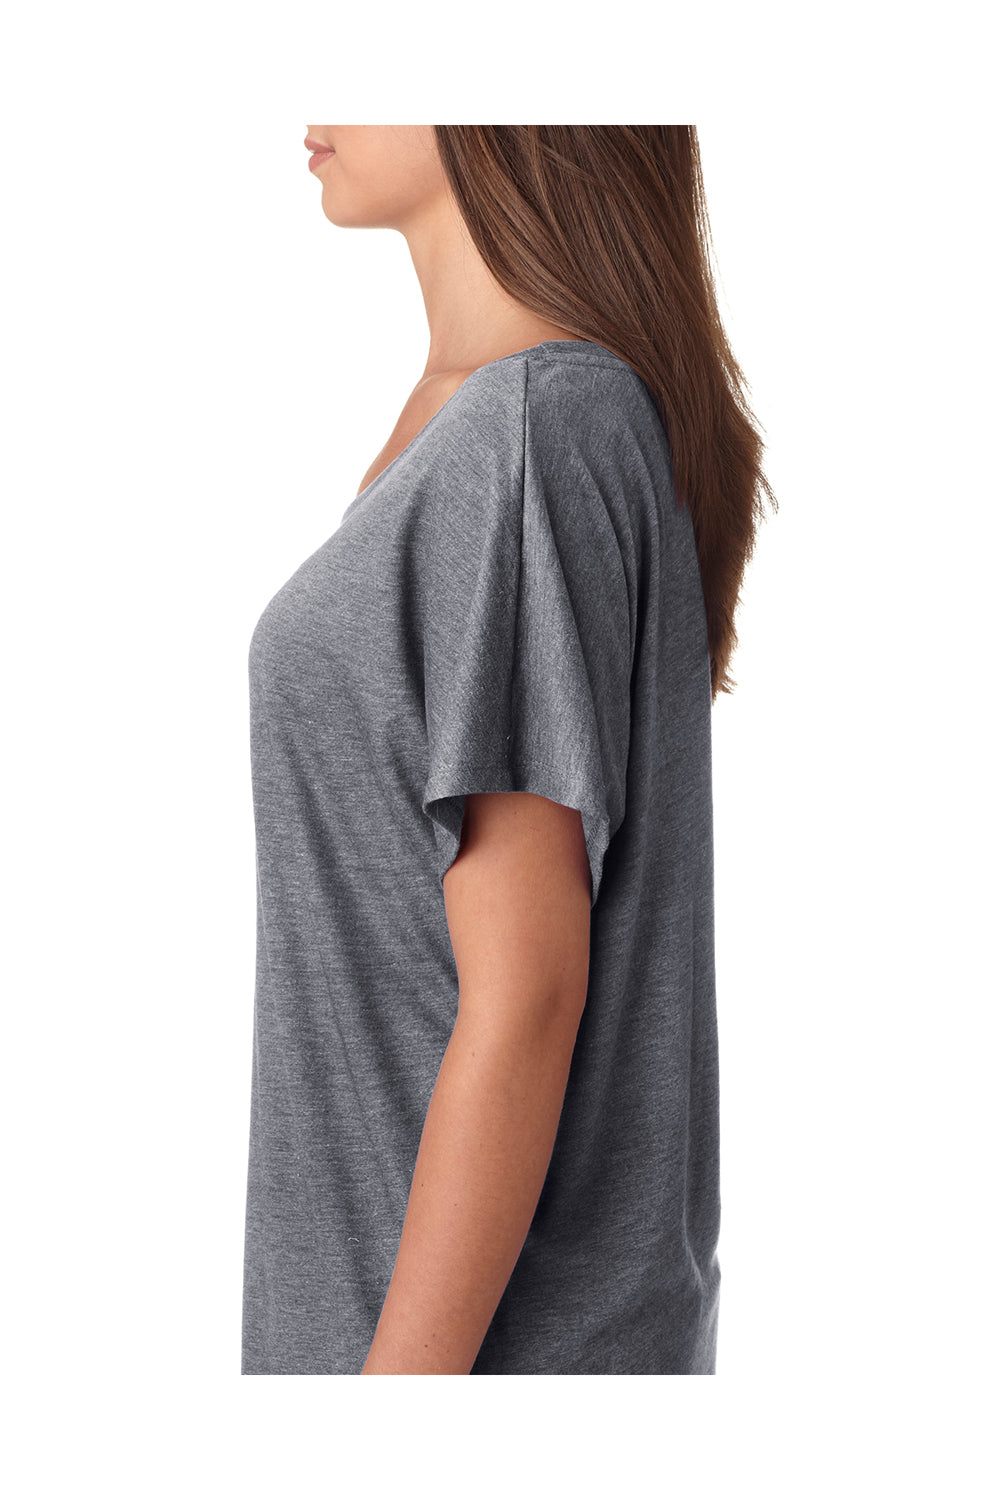 Next Level 6760 Womens Dolman Jersey Short Sleeve Scoop Neck T-Shirt Heather Grey Side